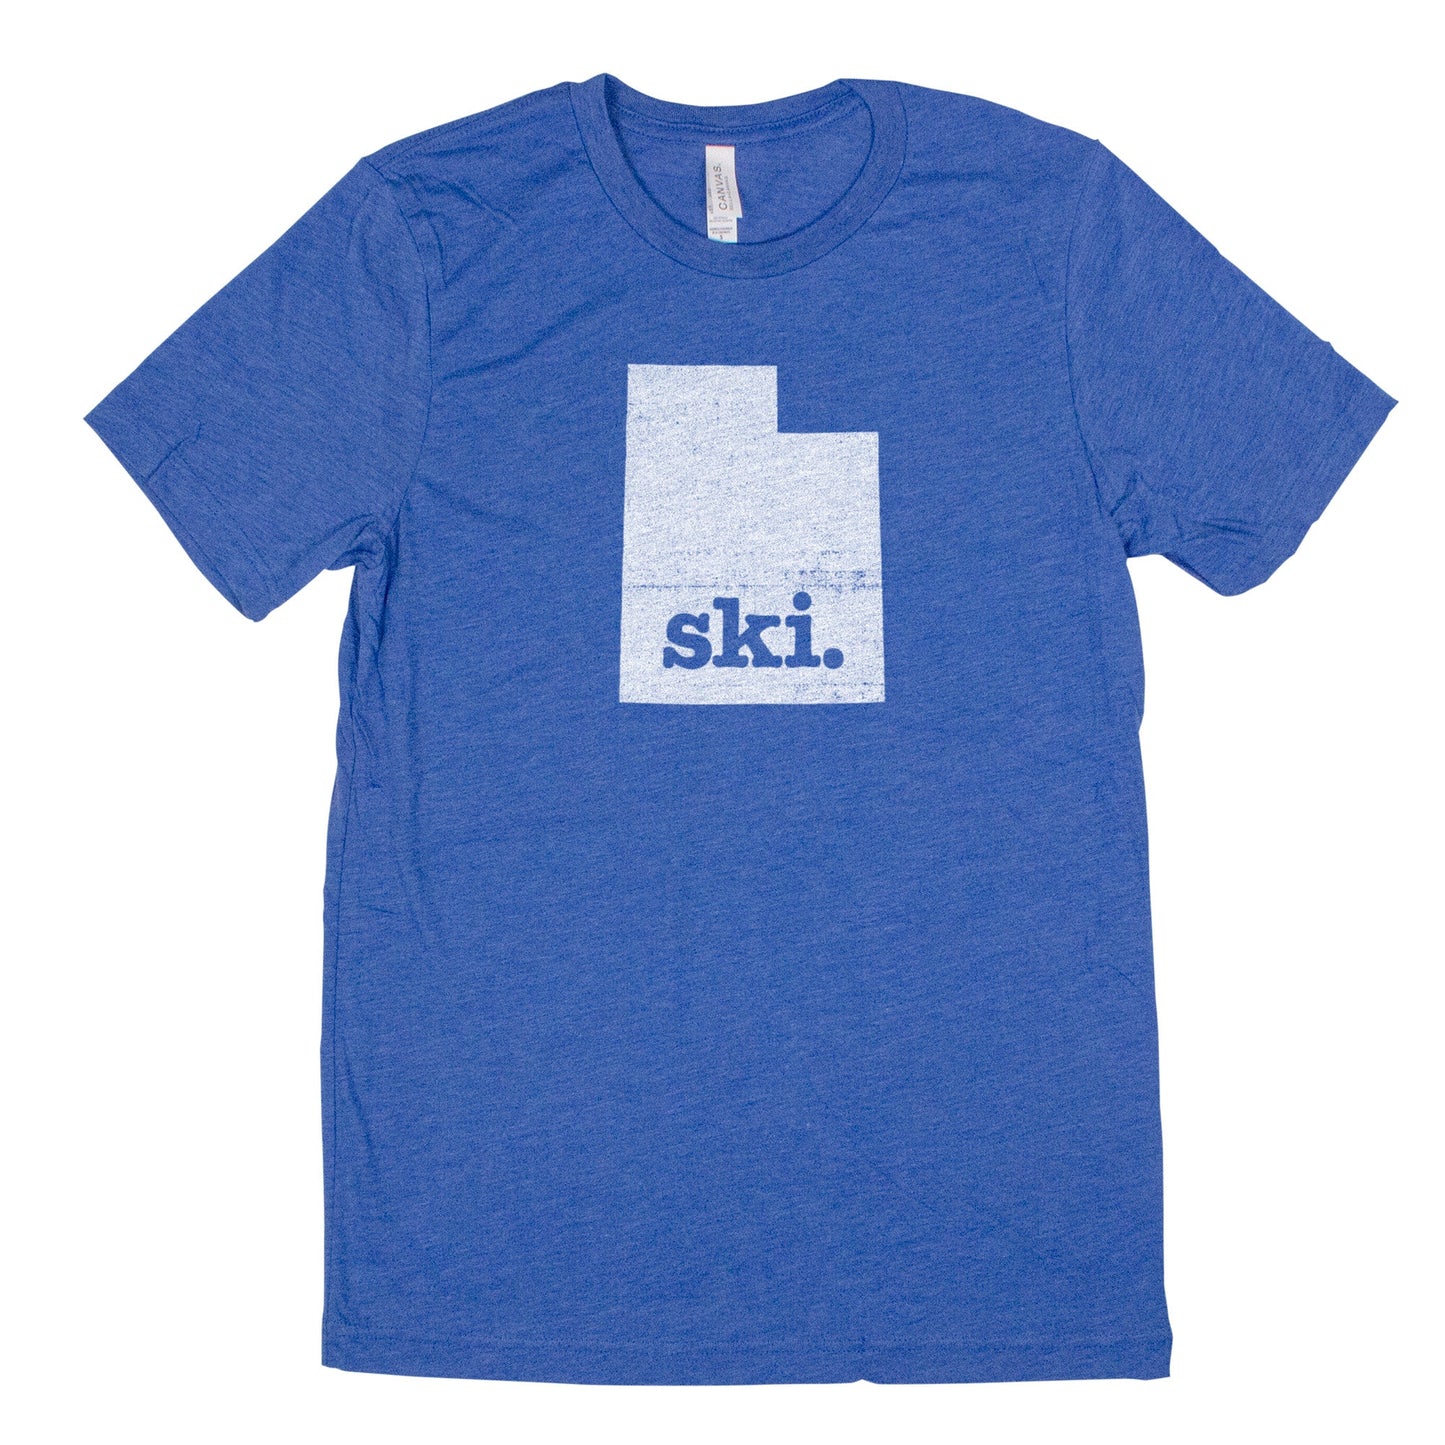 ski. Men's Unisex T-Shirt - Utah